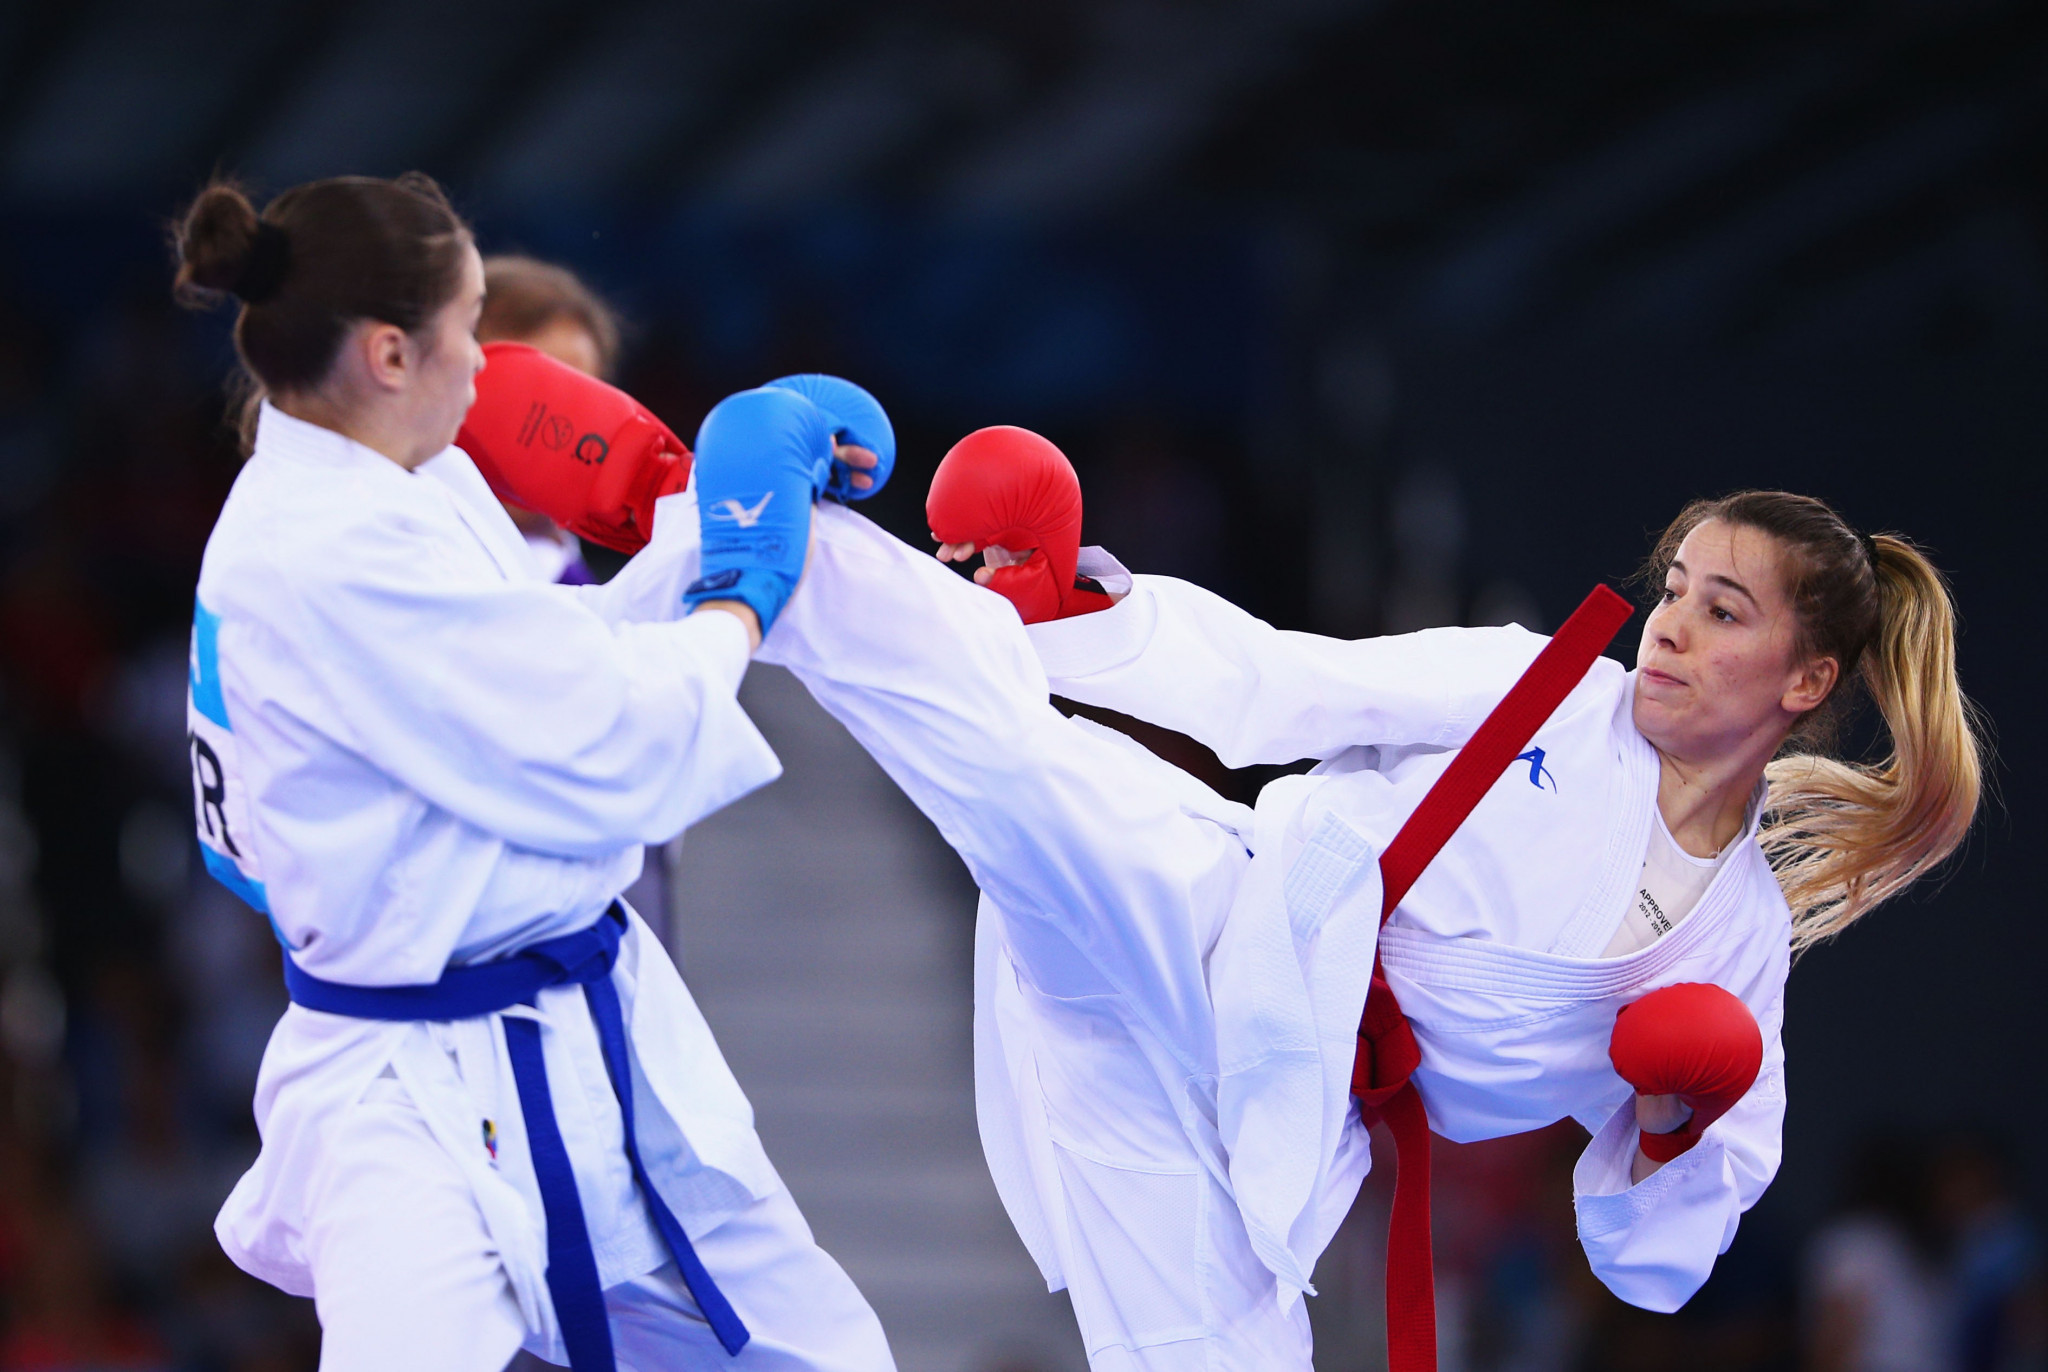 Guadalajara to host record-breaking Karate 1-Series A event